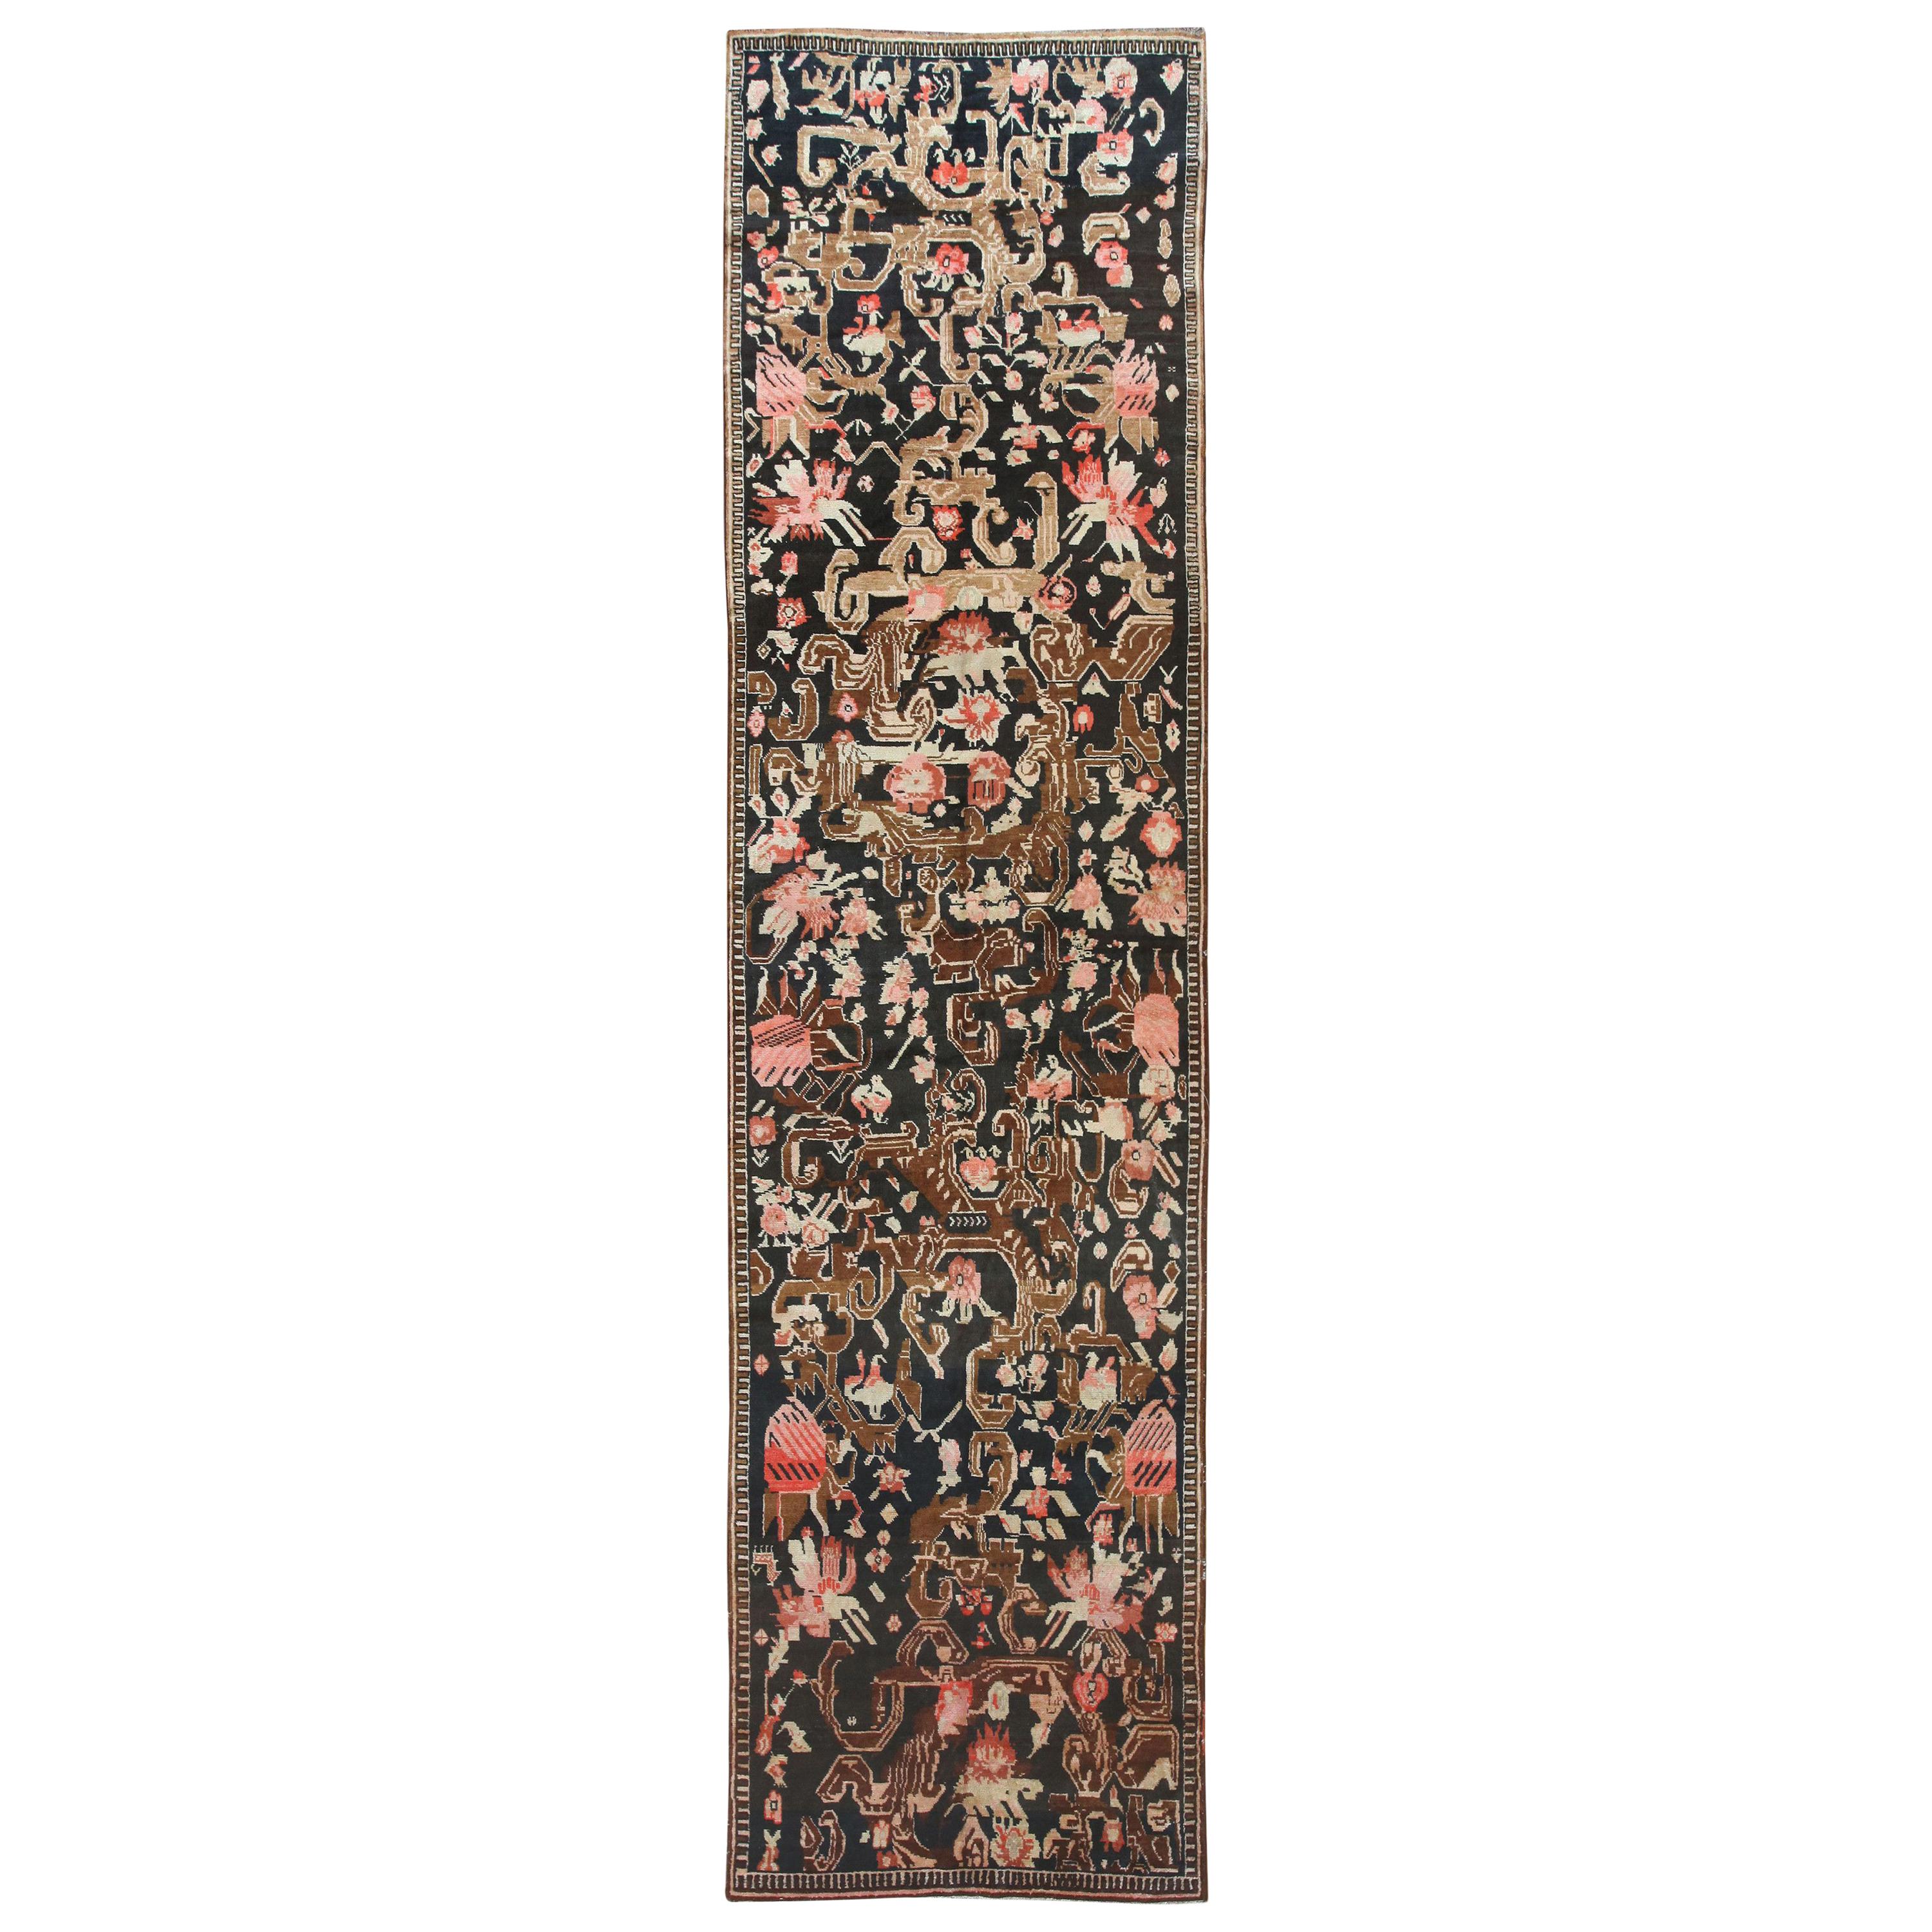 Antique Caucasian Karabagh Rug. Size: 4 ft x 14 ft 7 in (1.22 m x 4.44 m)